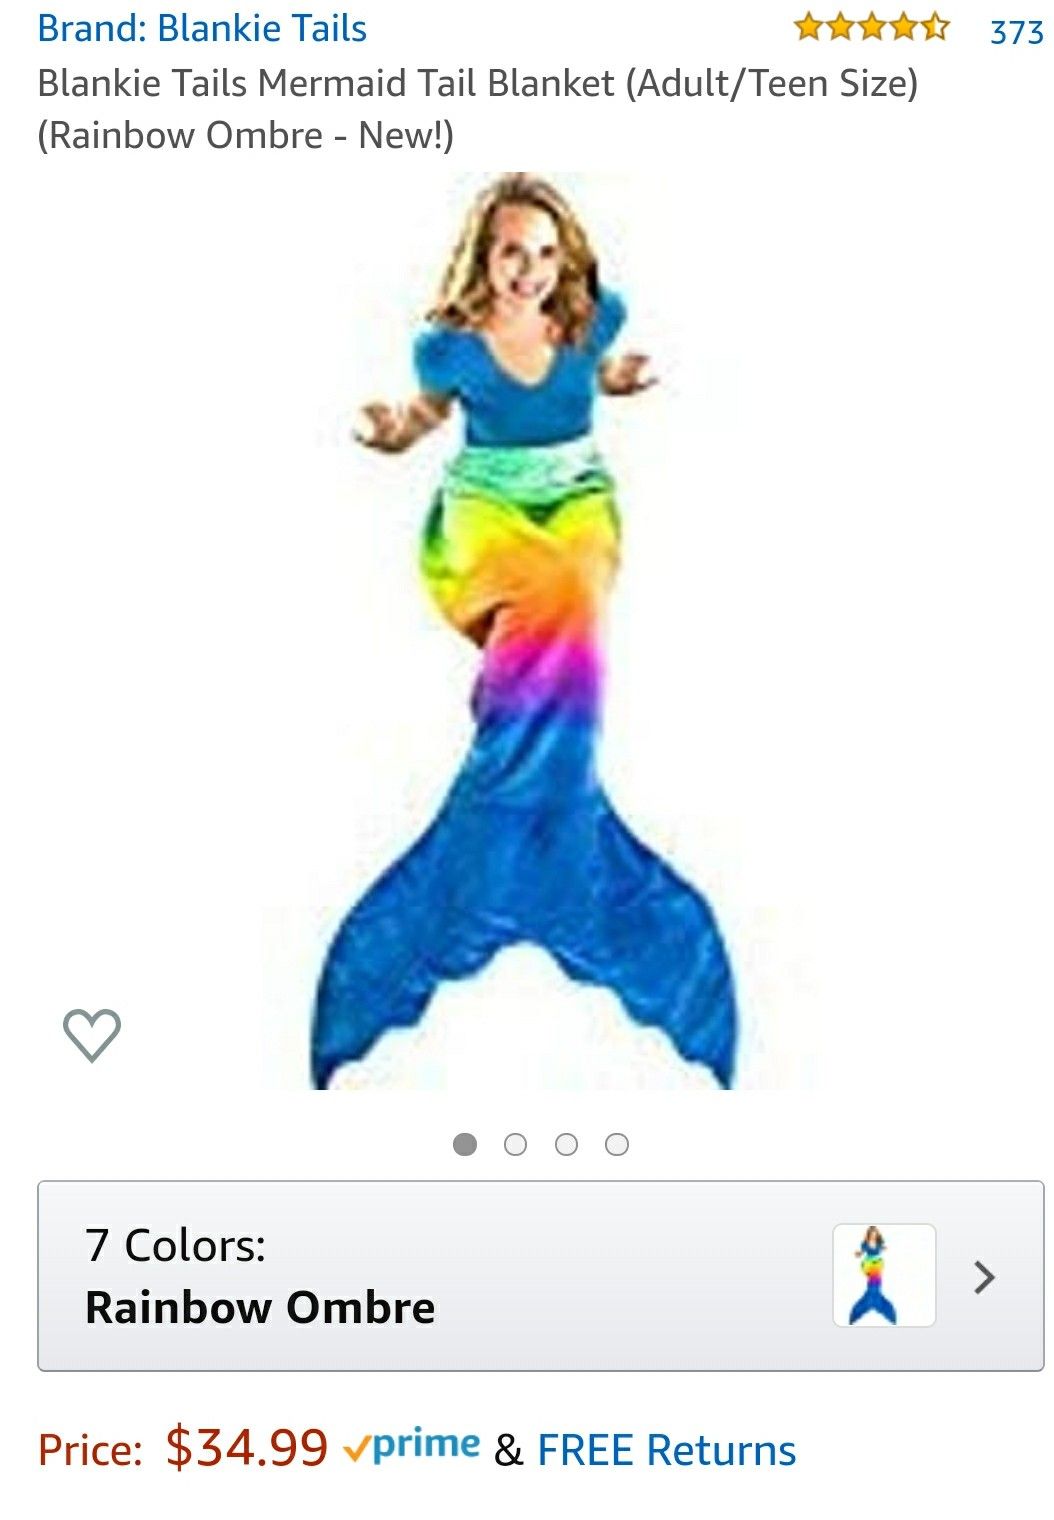 Brand new Adult Mermaid tail blanket